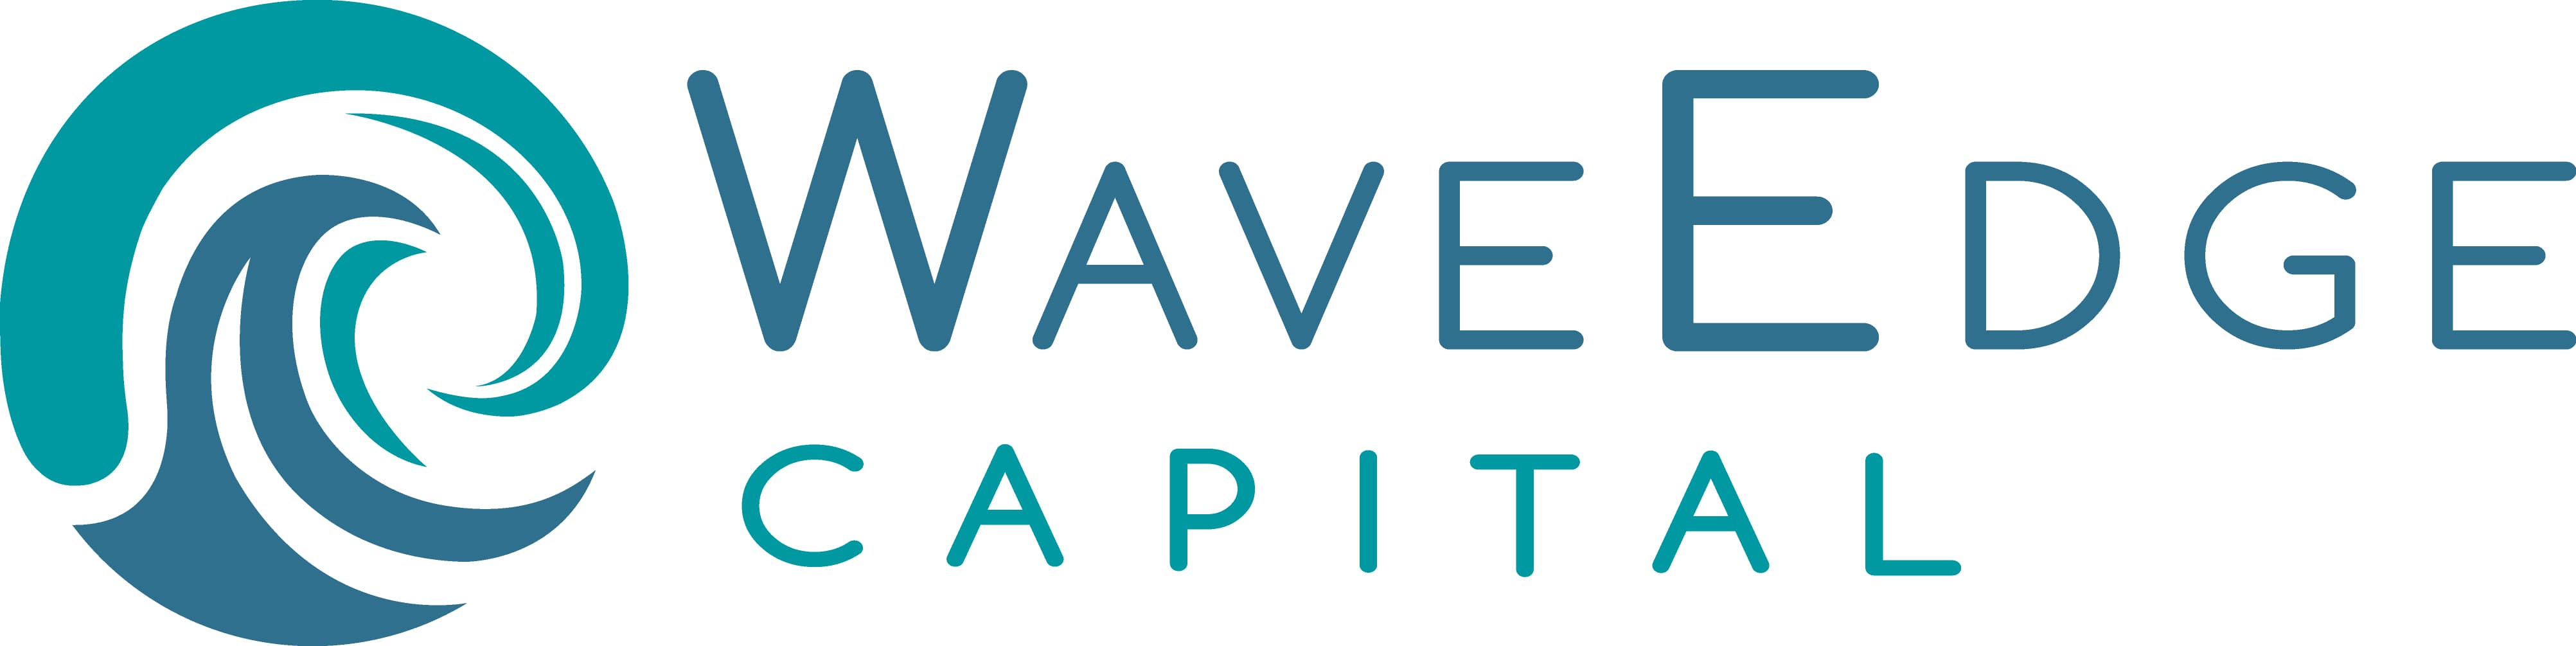 WaveEdge Capital reviews